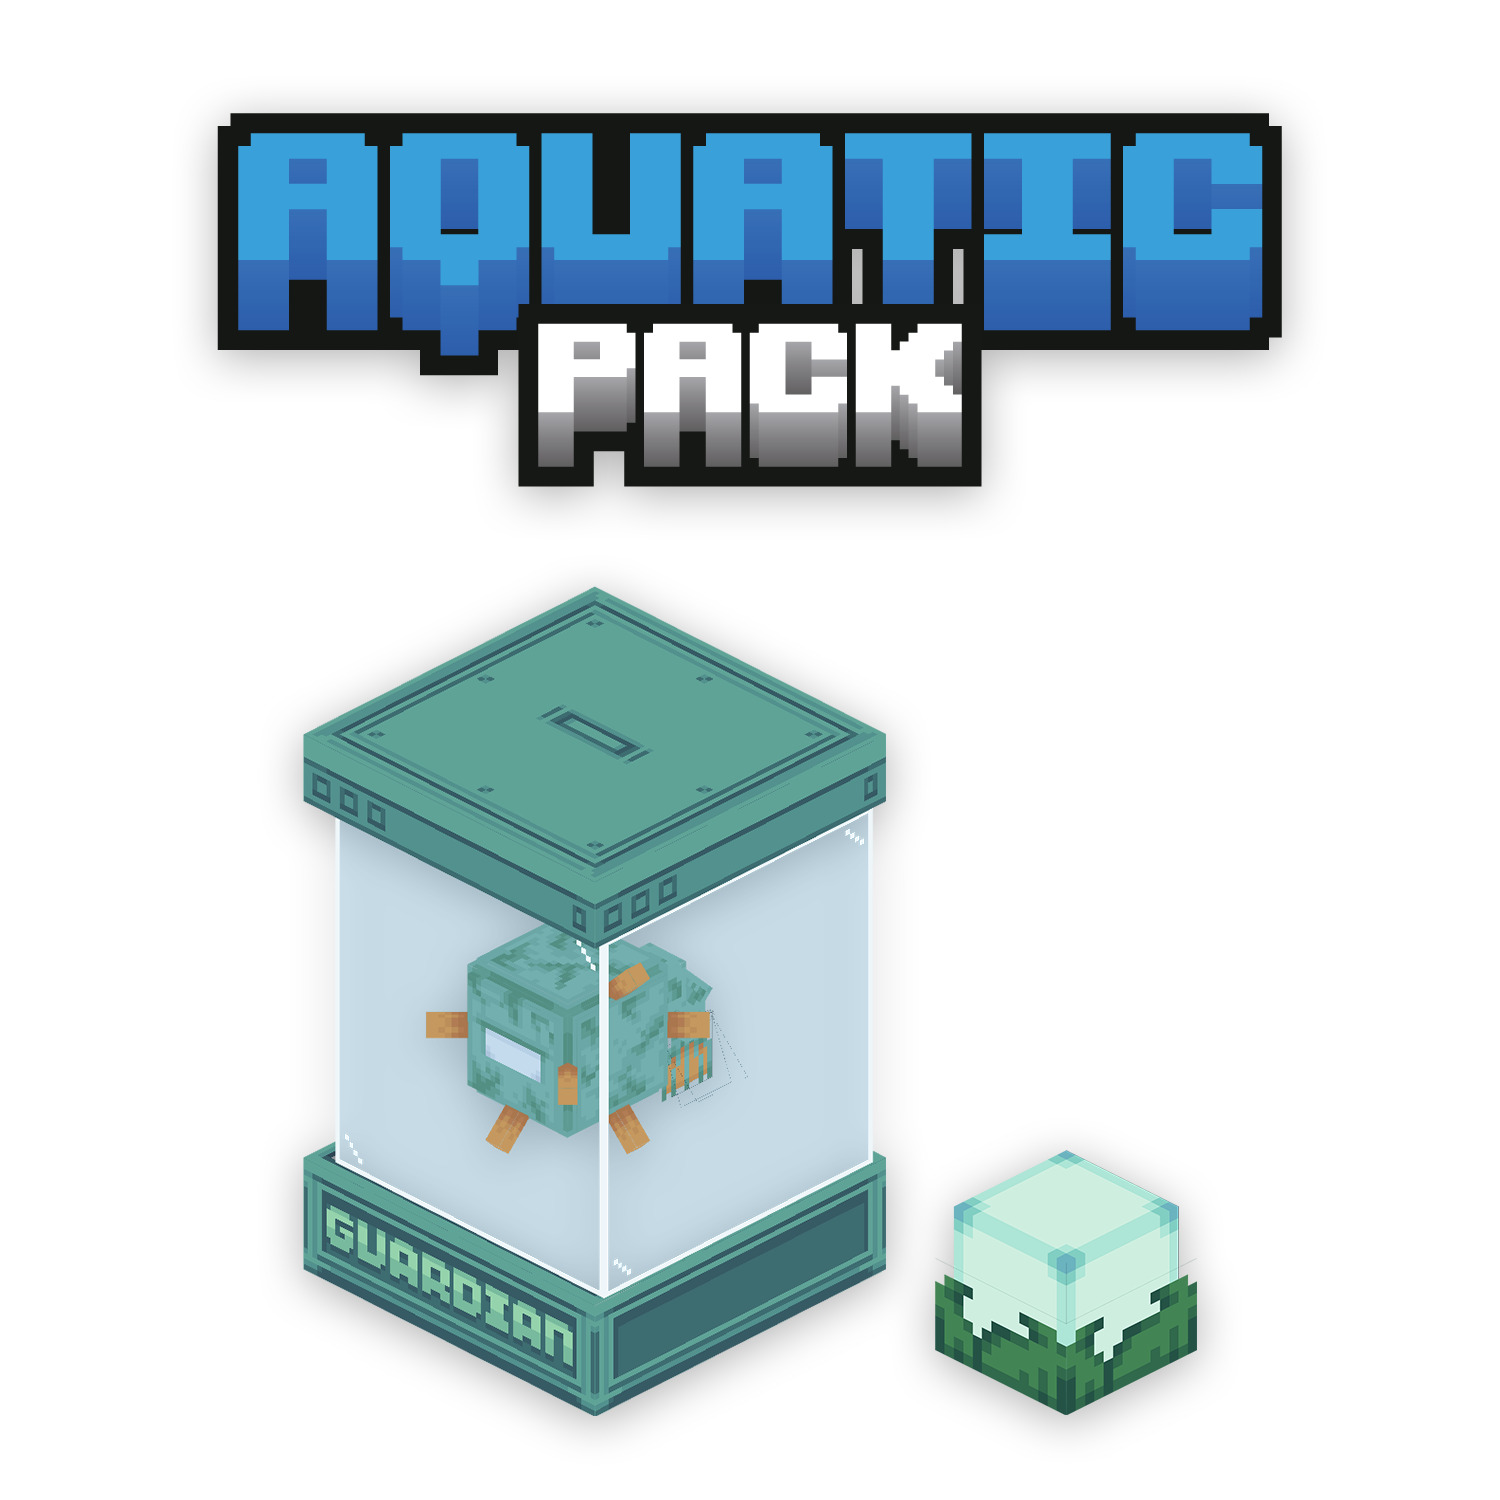 Aquatic-Furniture-Volume-2-Image-7.jpg